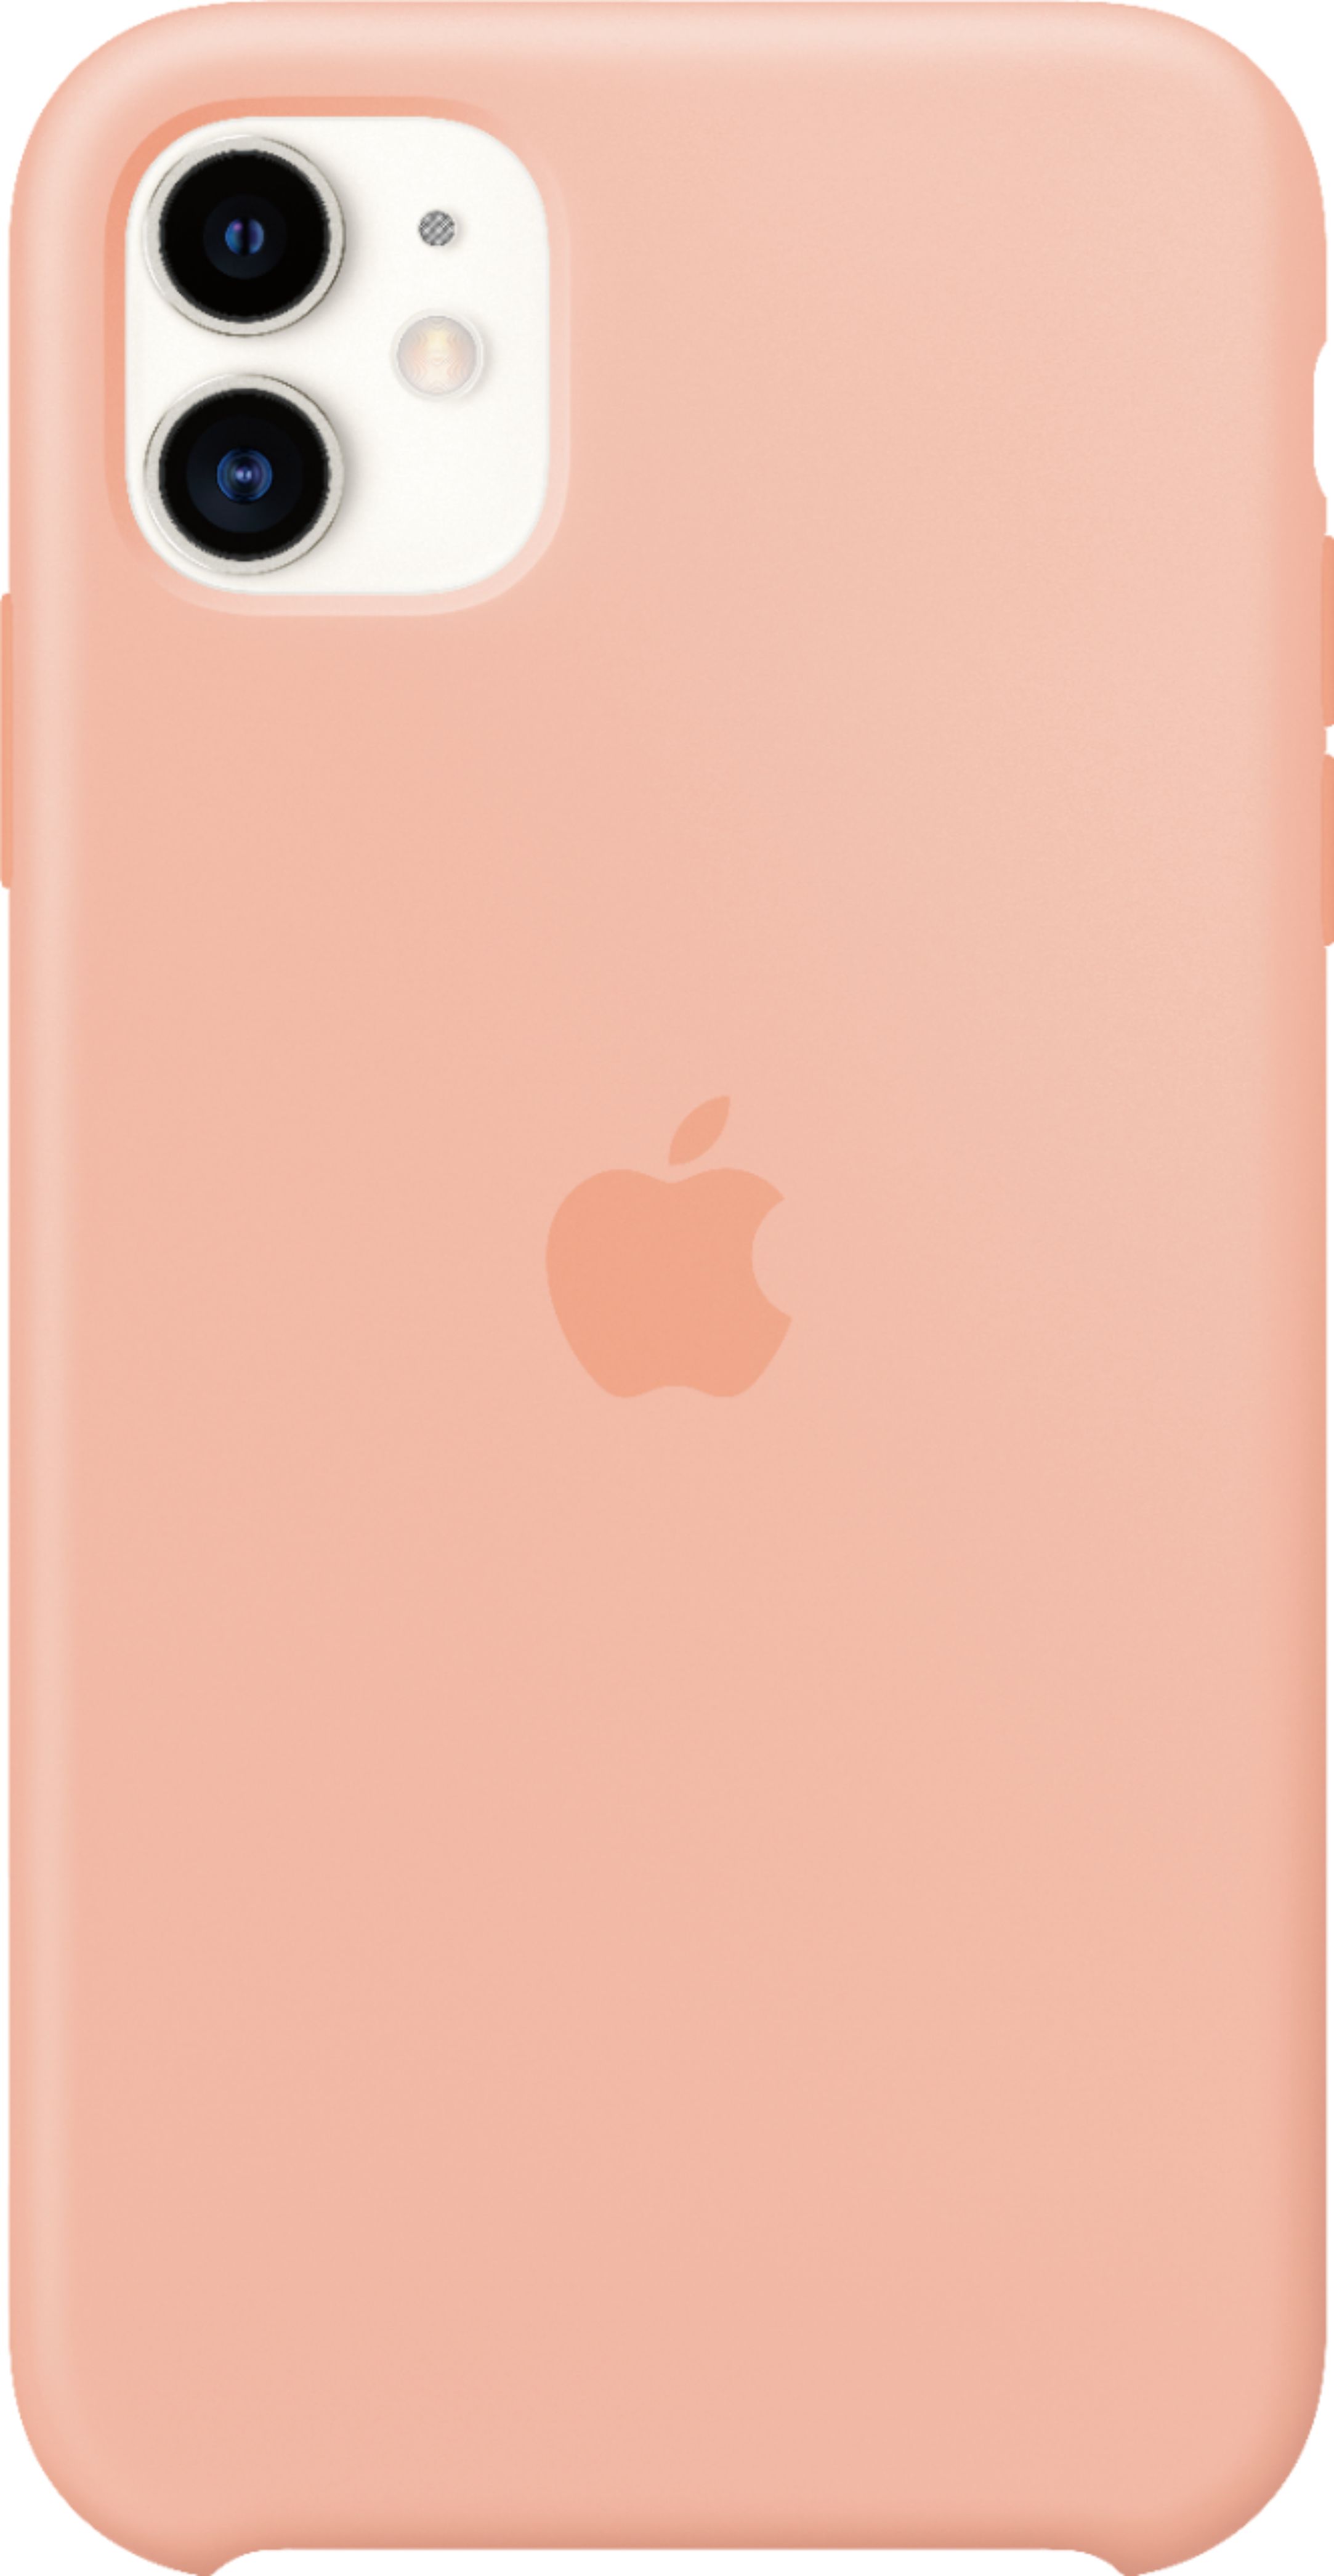 Best Buy Apple Iphone 11 Silicone Case Grapefruit Apple2020 Accessory 34